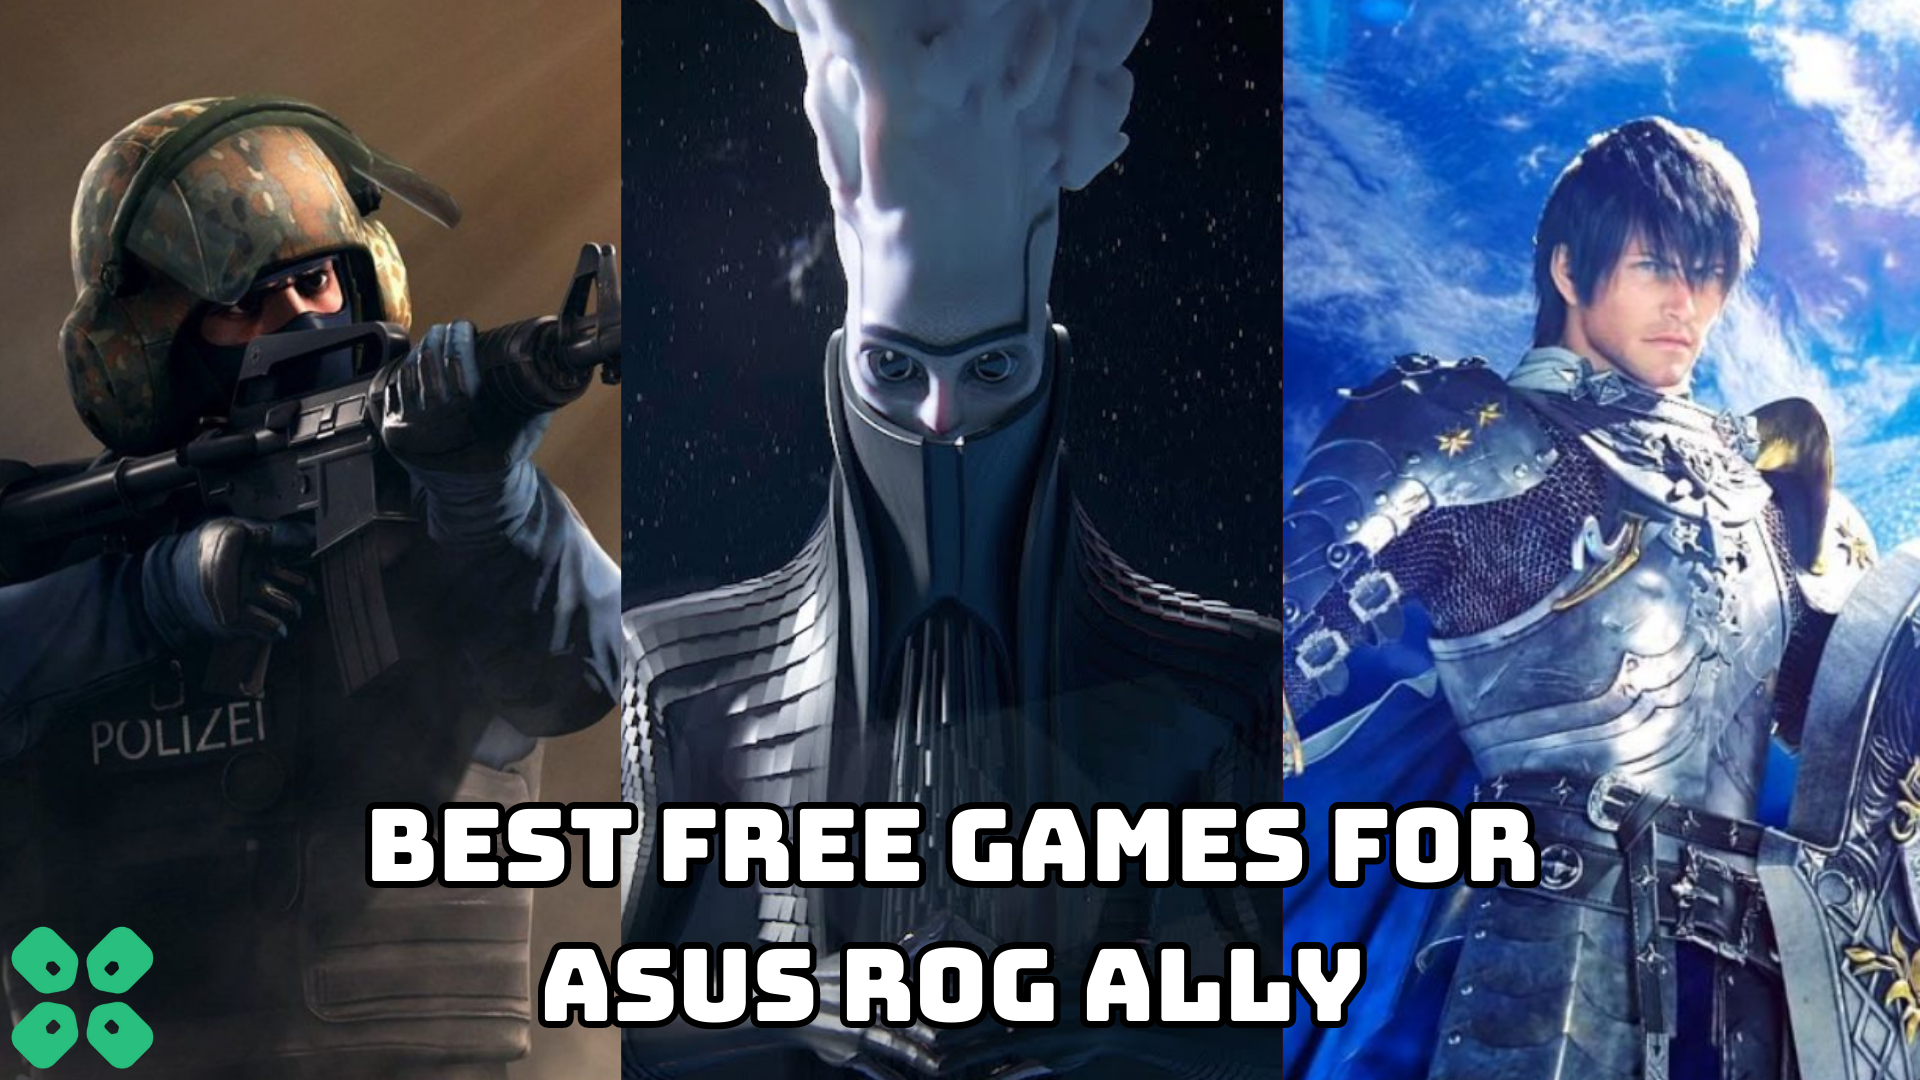 Best Asus ROG Ally Free Games